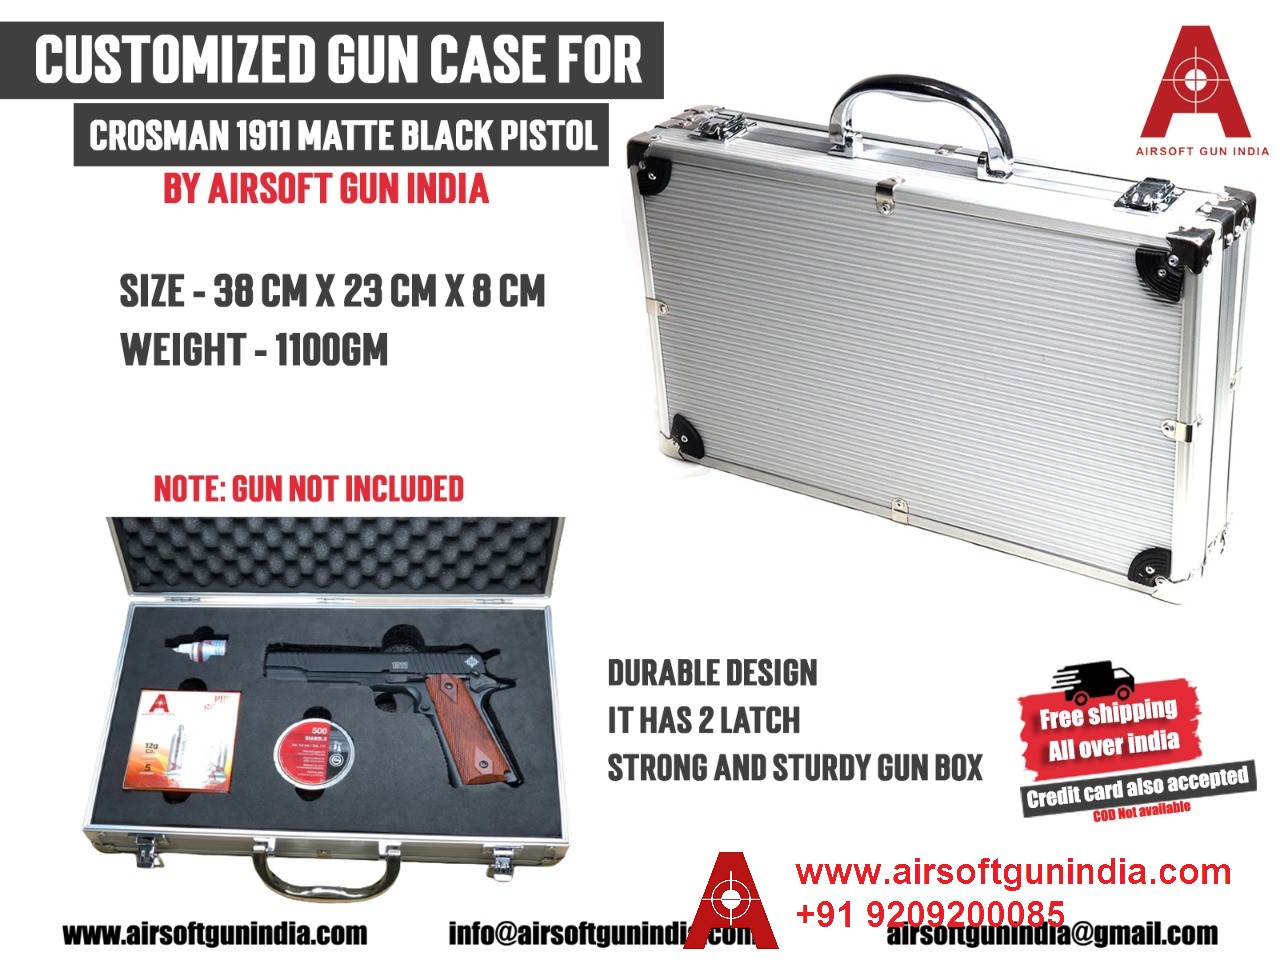 Customized Gun Case For Crosman 1911 CO2 Pellet Pistol, Matte Black By Airsoft Gun India